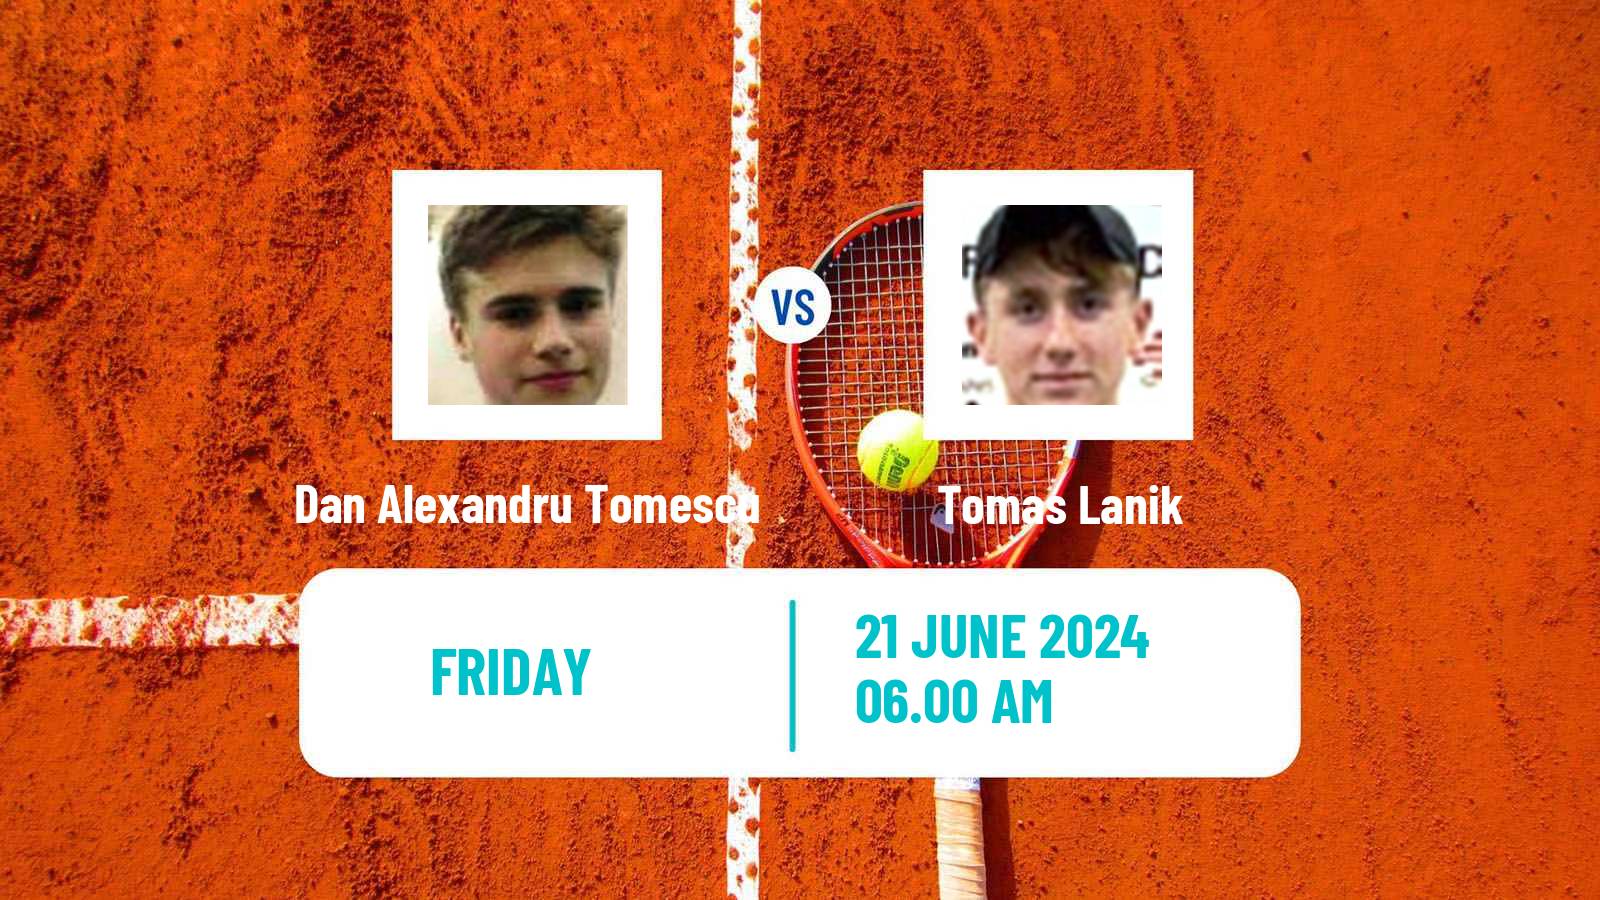 Tennis ITF M15 Nyiregyhaza 2 Men Dan Alexandru Tomescu - Tomas Lanik